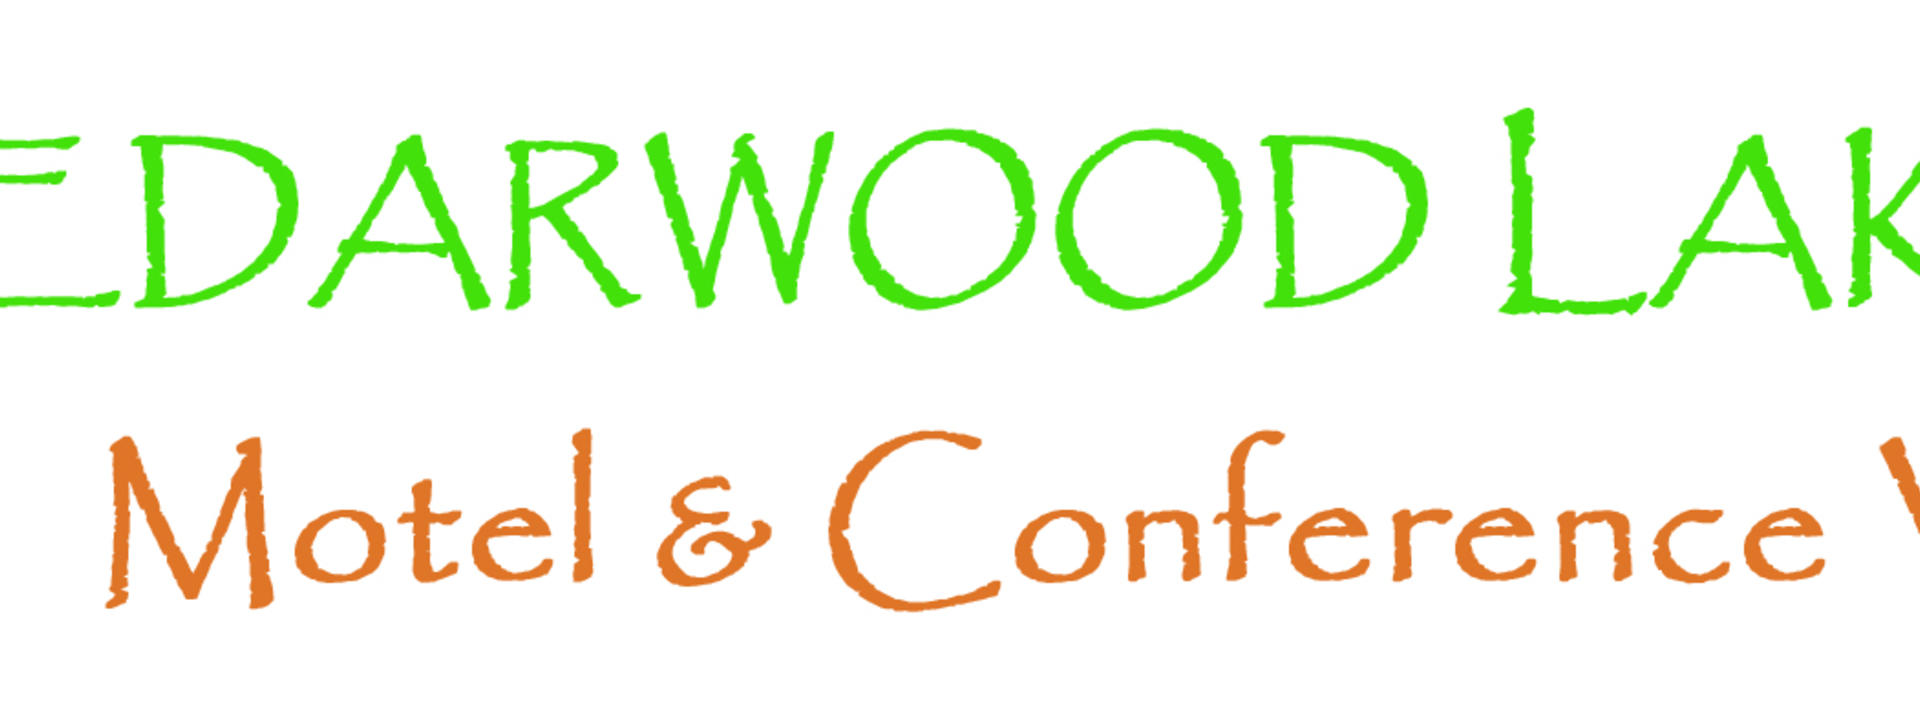 Cedarwood Logo Small